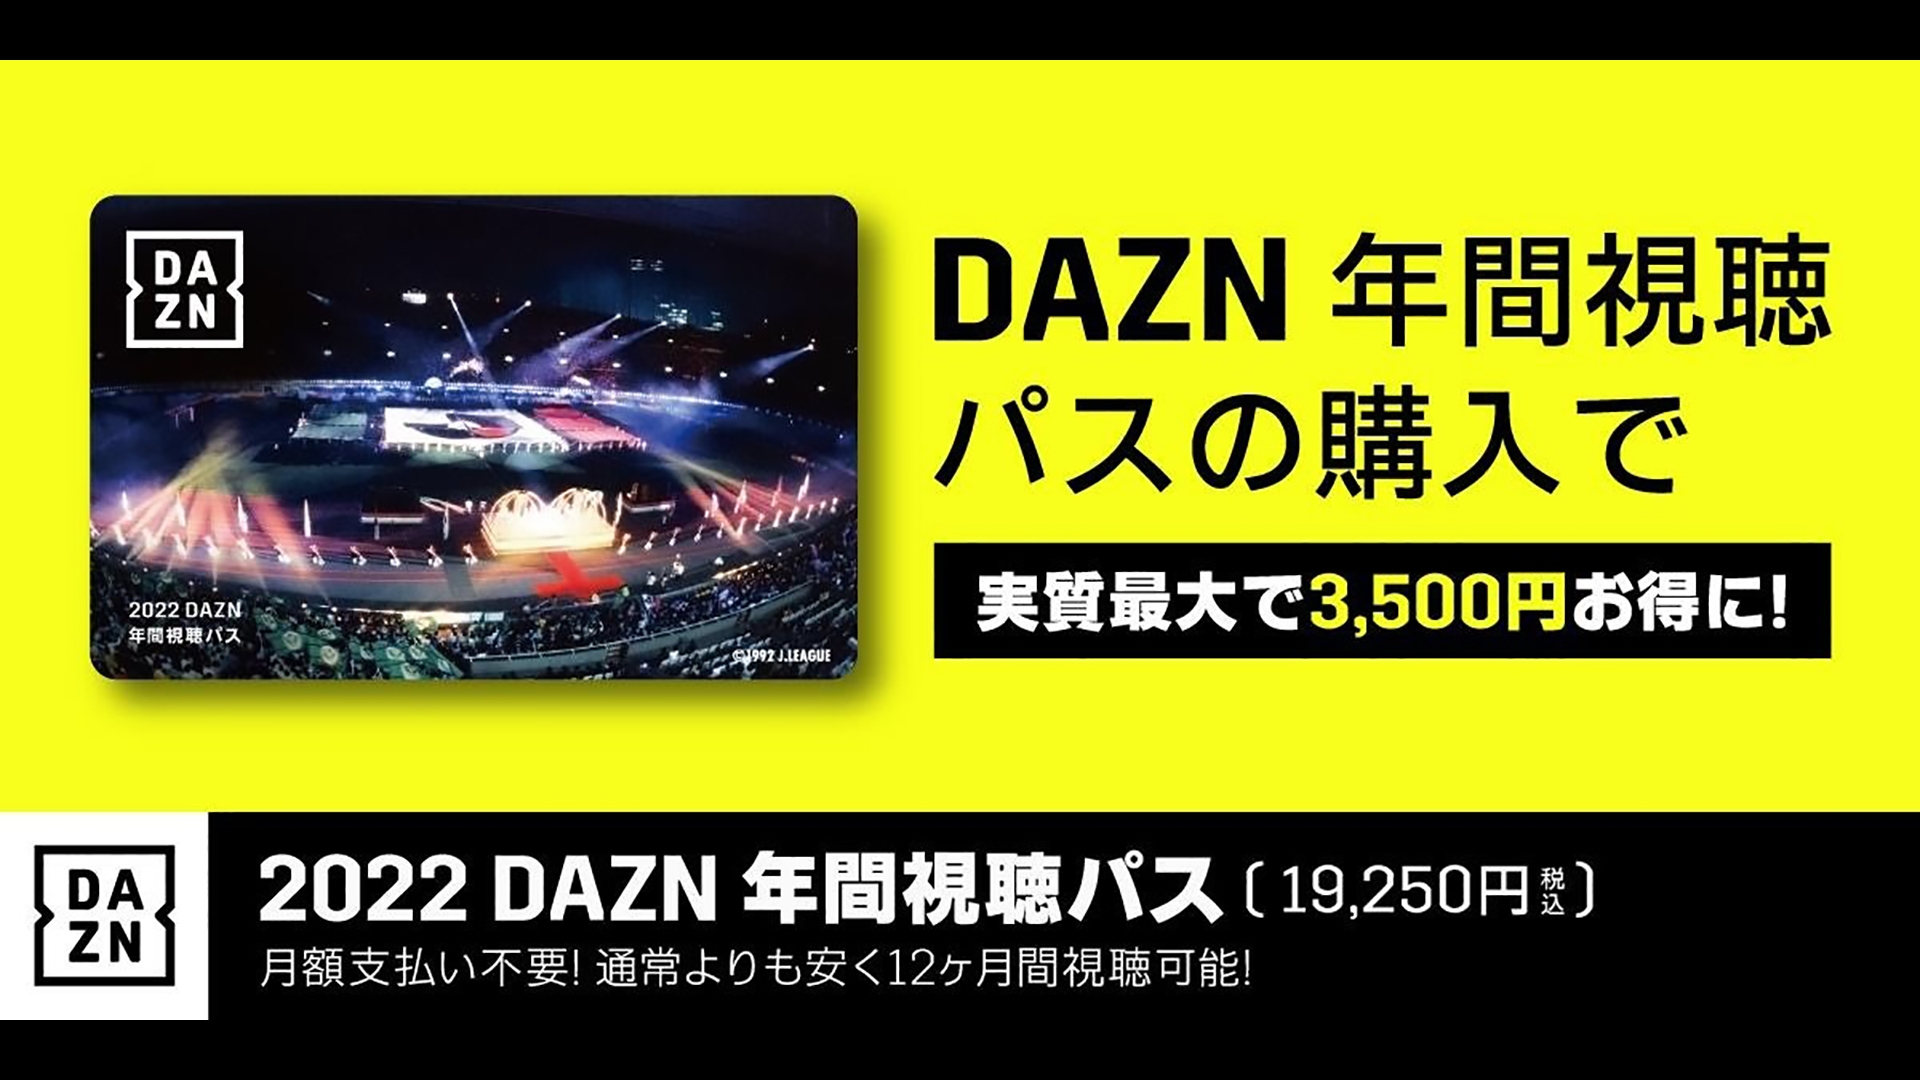 Dazn ダゾーン が 22 Dazn年間視聴パス の販売を開始 通常よりお得にjリーグを視聴 Goal Com